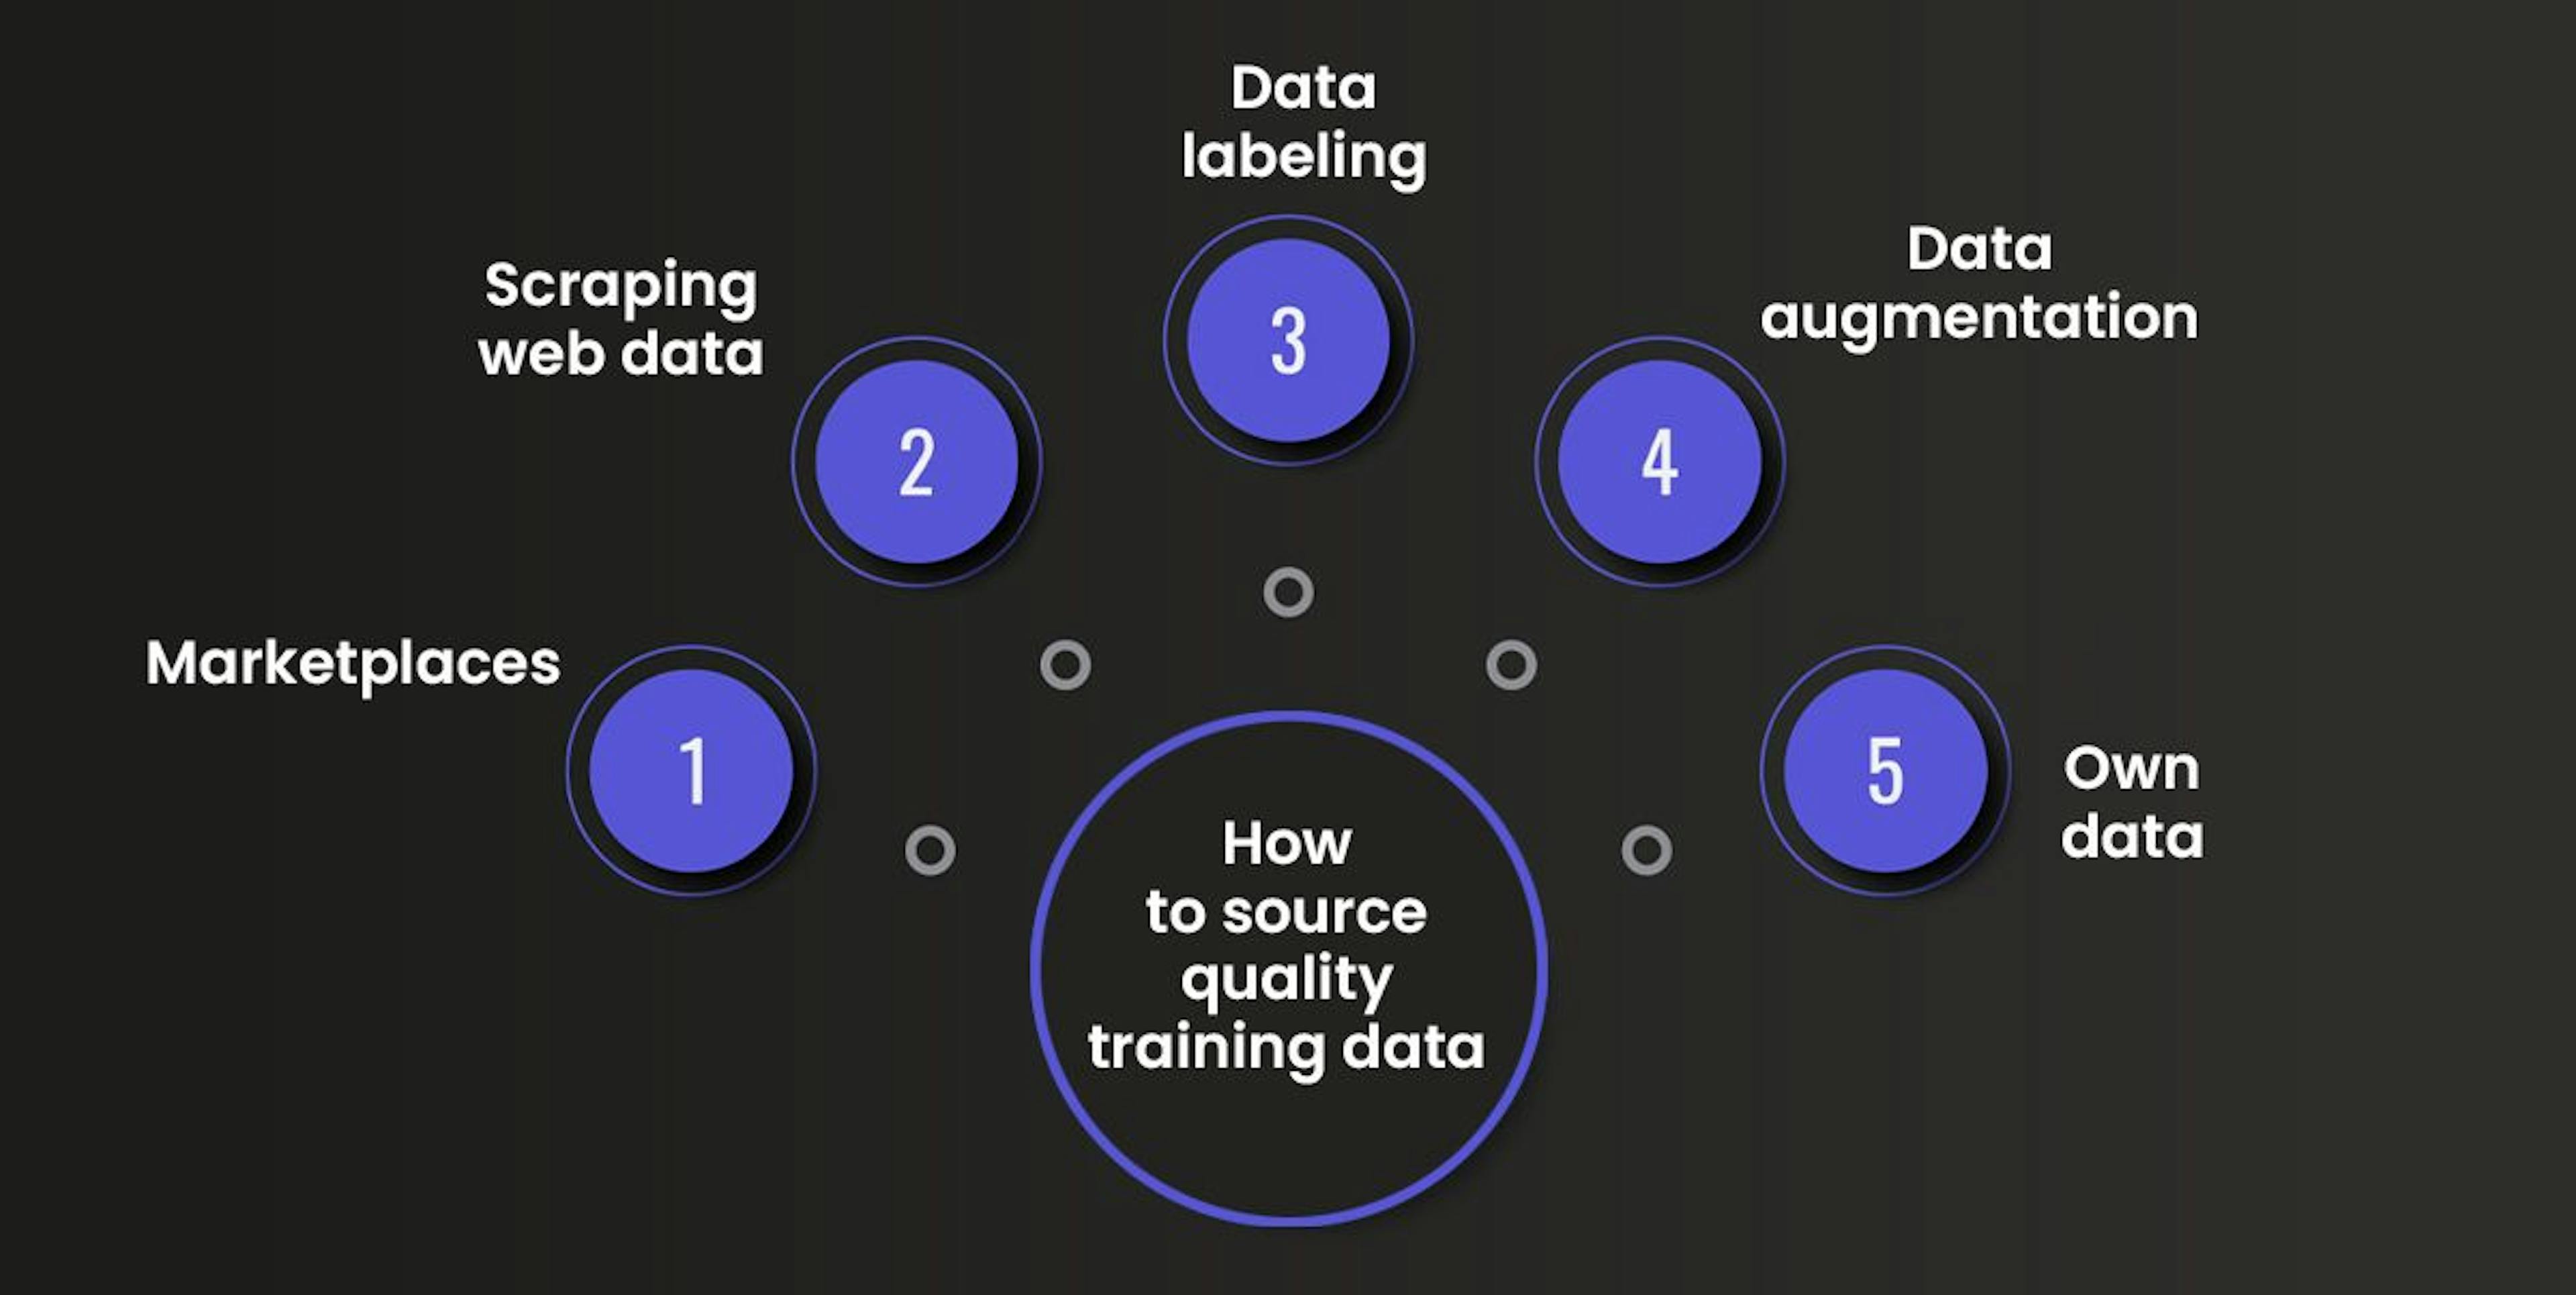 Quality training data